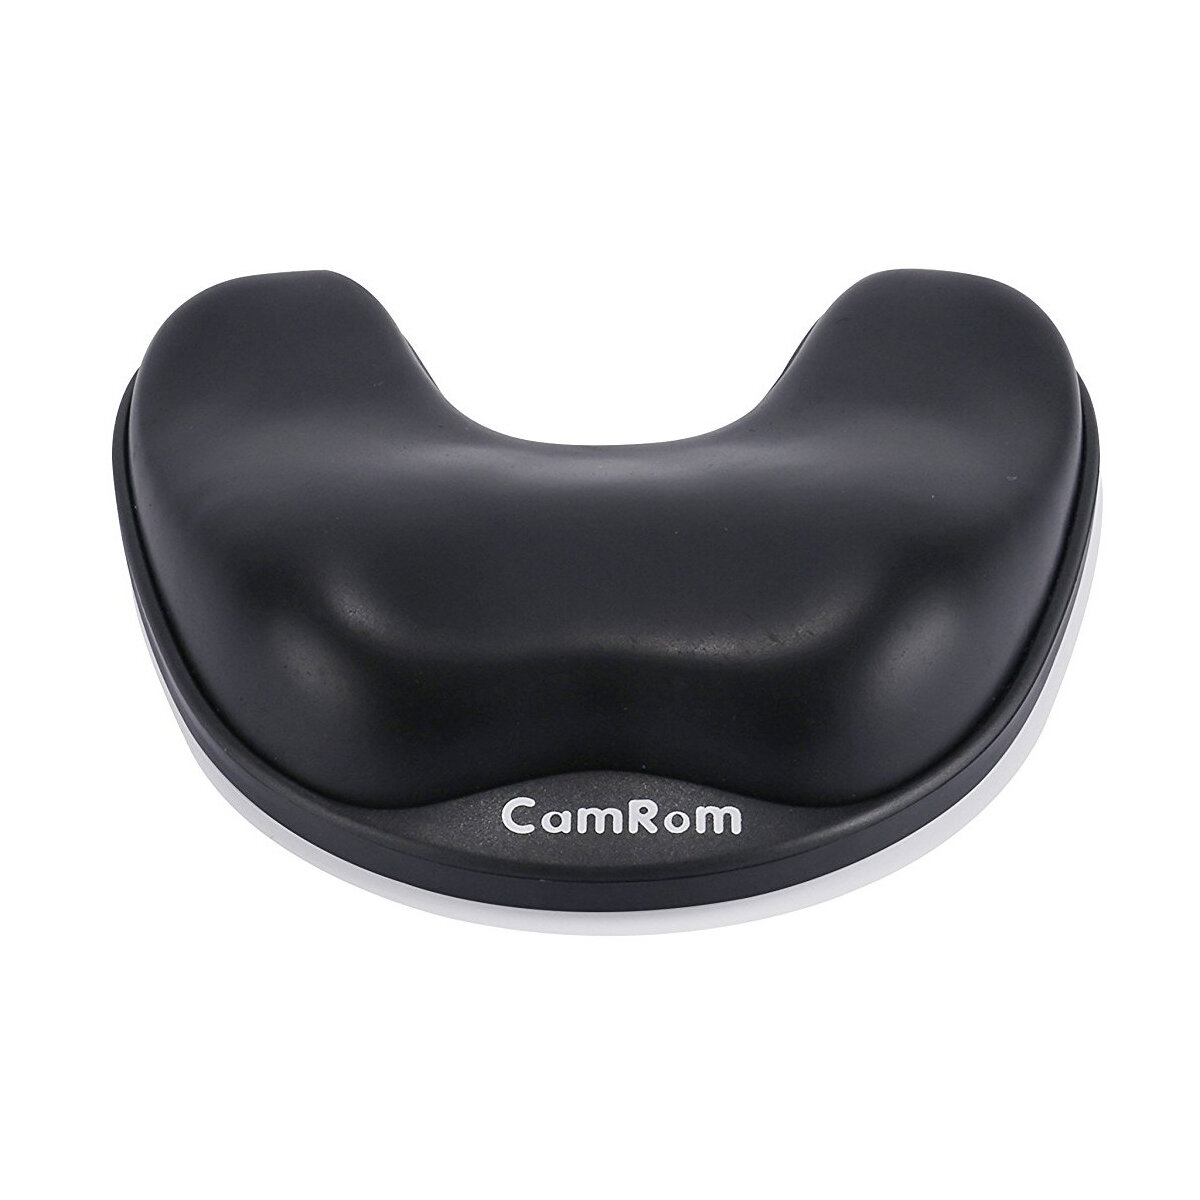 

CamRom Wrist Pad Ergonomic Slow Rebound Memory Foam Anti-Skid Ball Bearing Design Mousepad Support Wrist Rest Mat for Ho